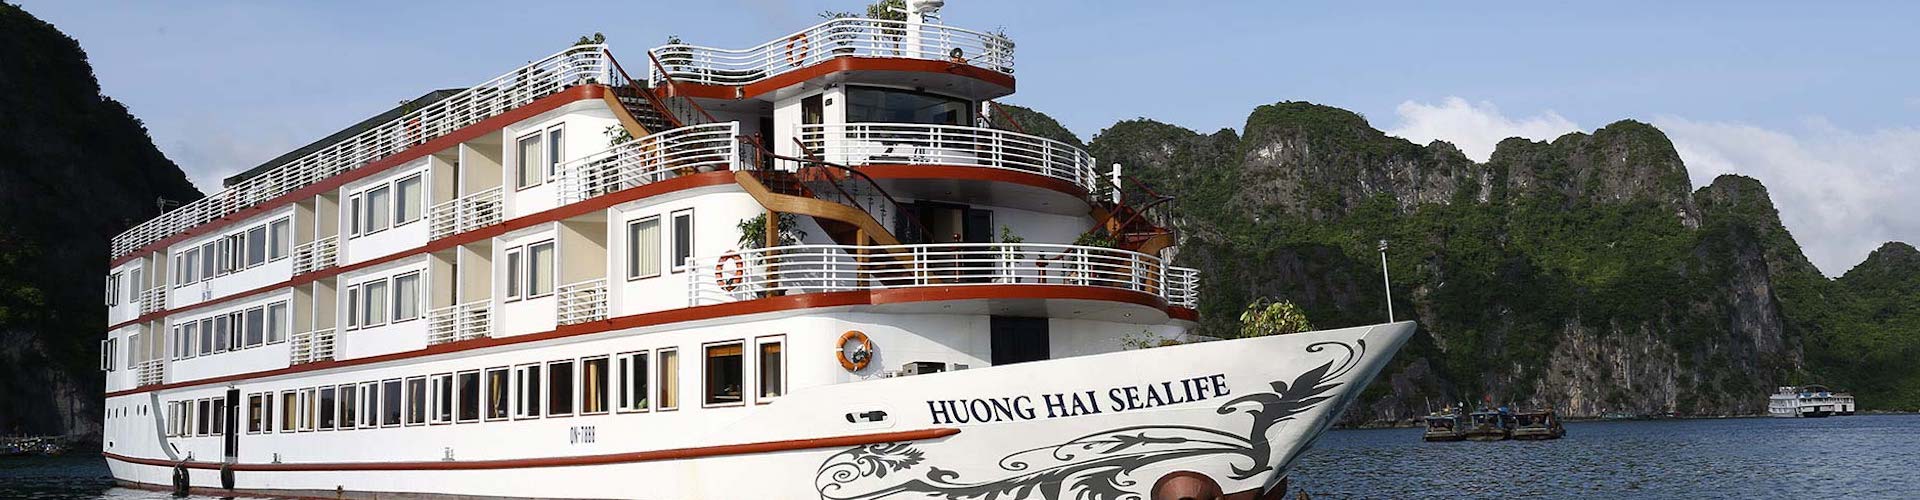 Fr-Huong Hai Sealife Cruise 